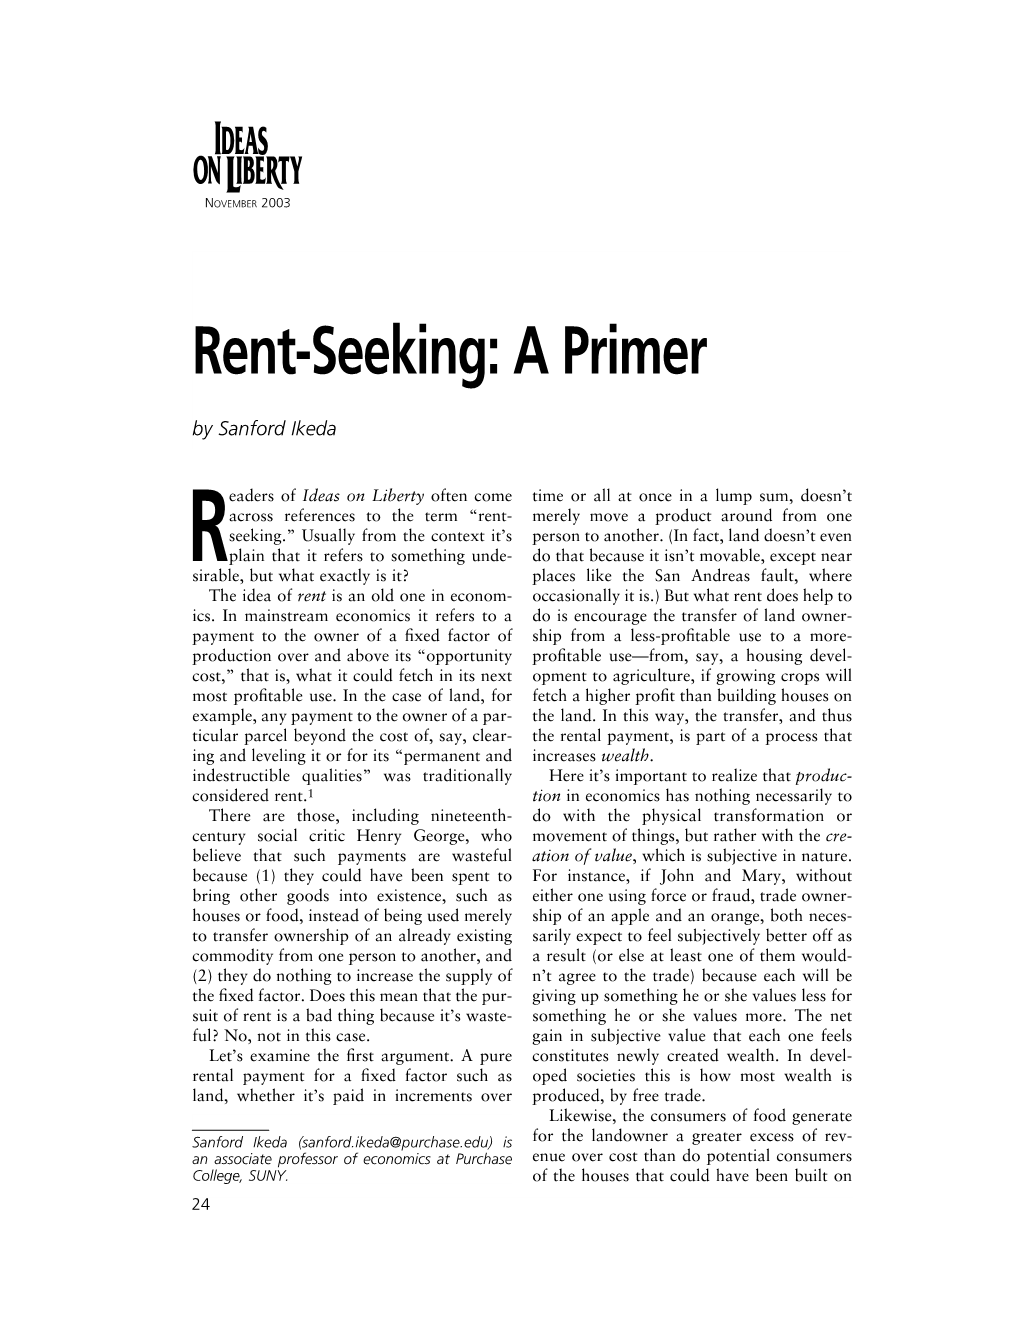 Rent-Seeking: a Primer by Sanford Ikeda